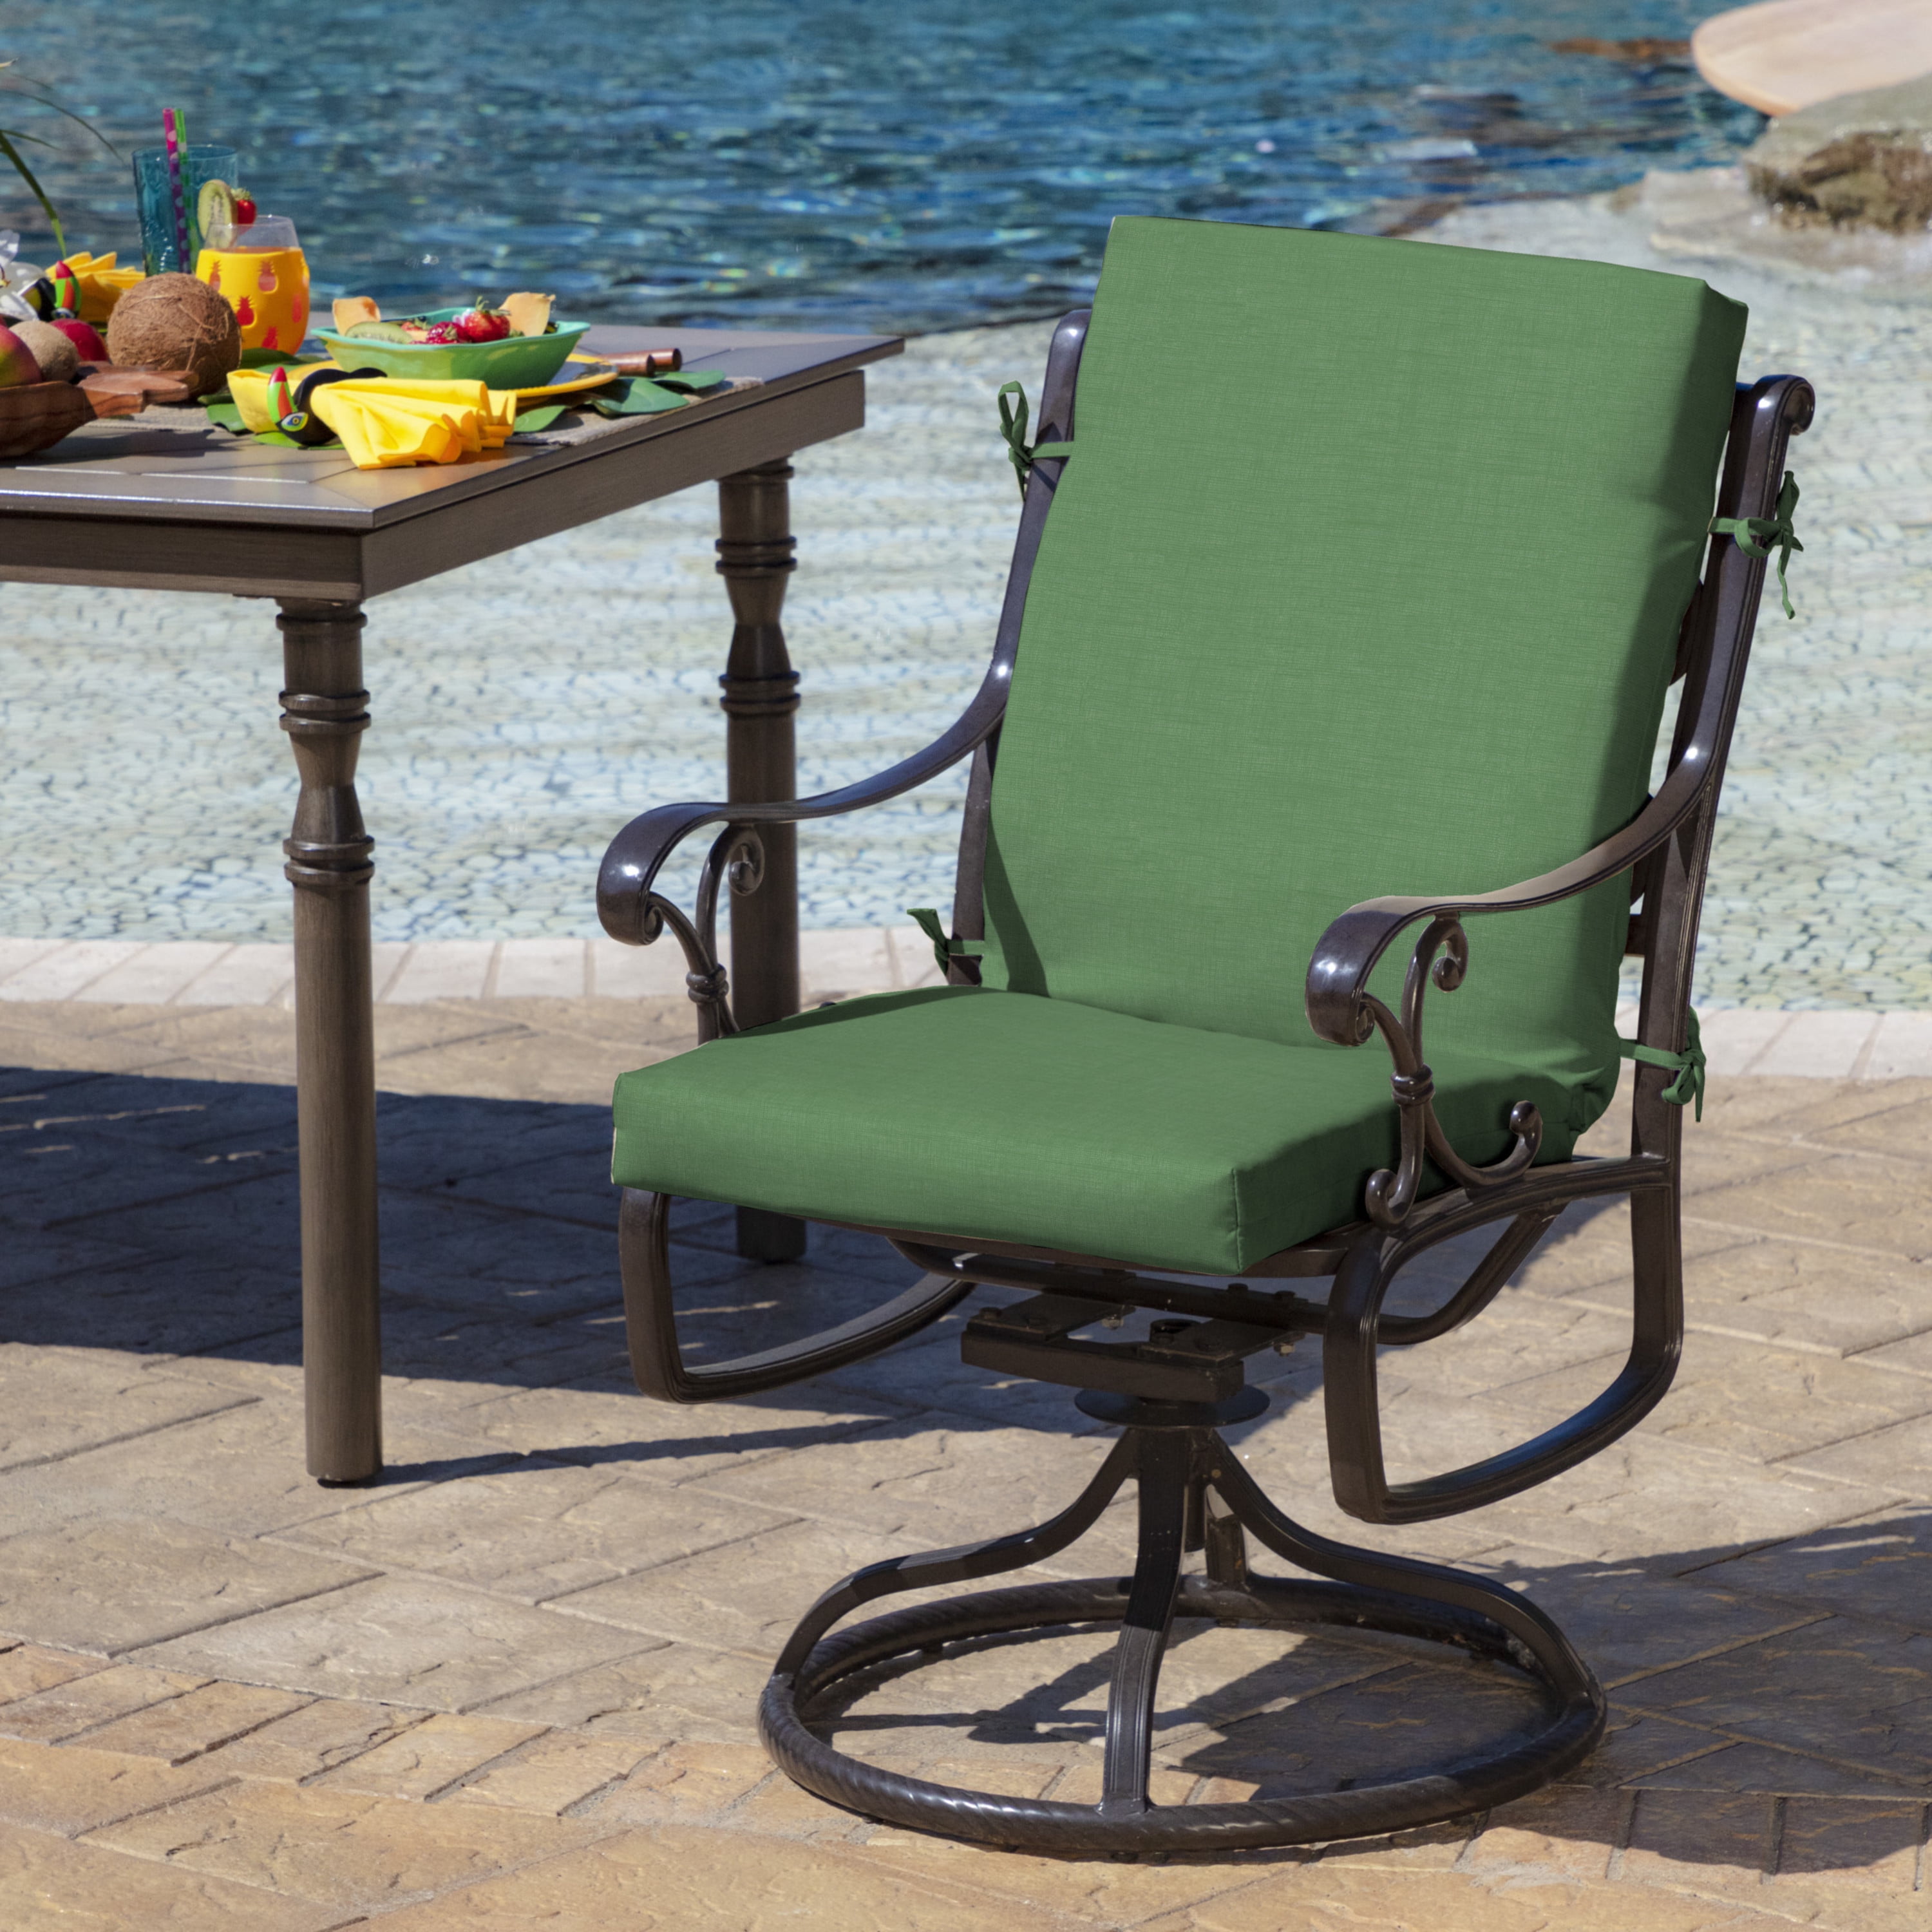 Wagan Larocca Outdoor 2'' Dining Chair Seat Cushion